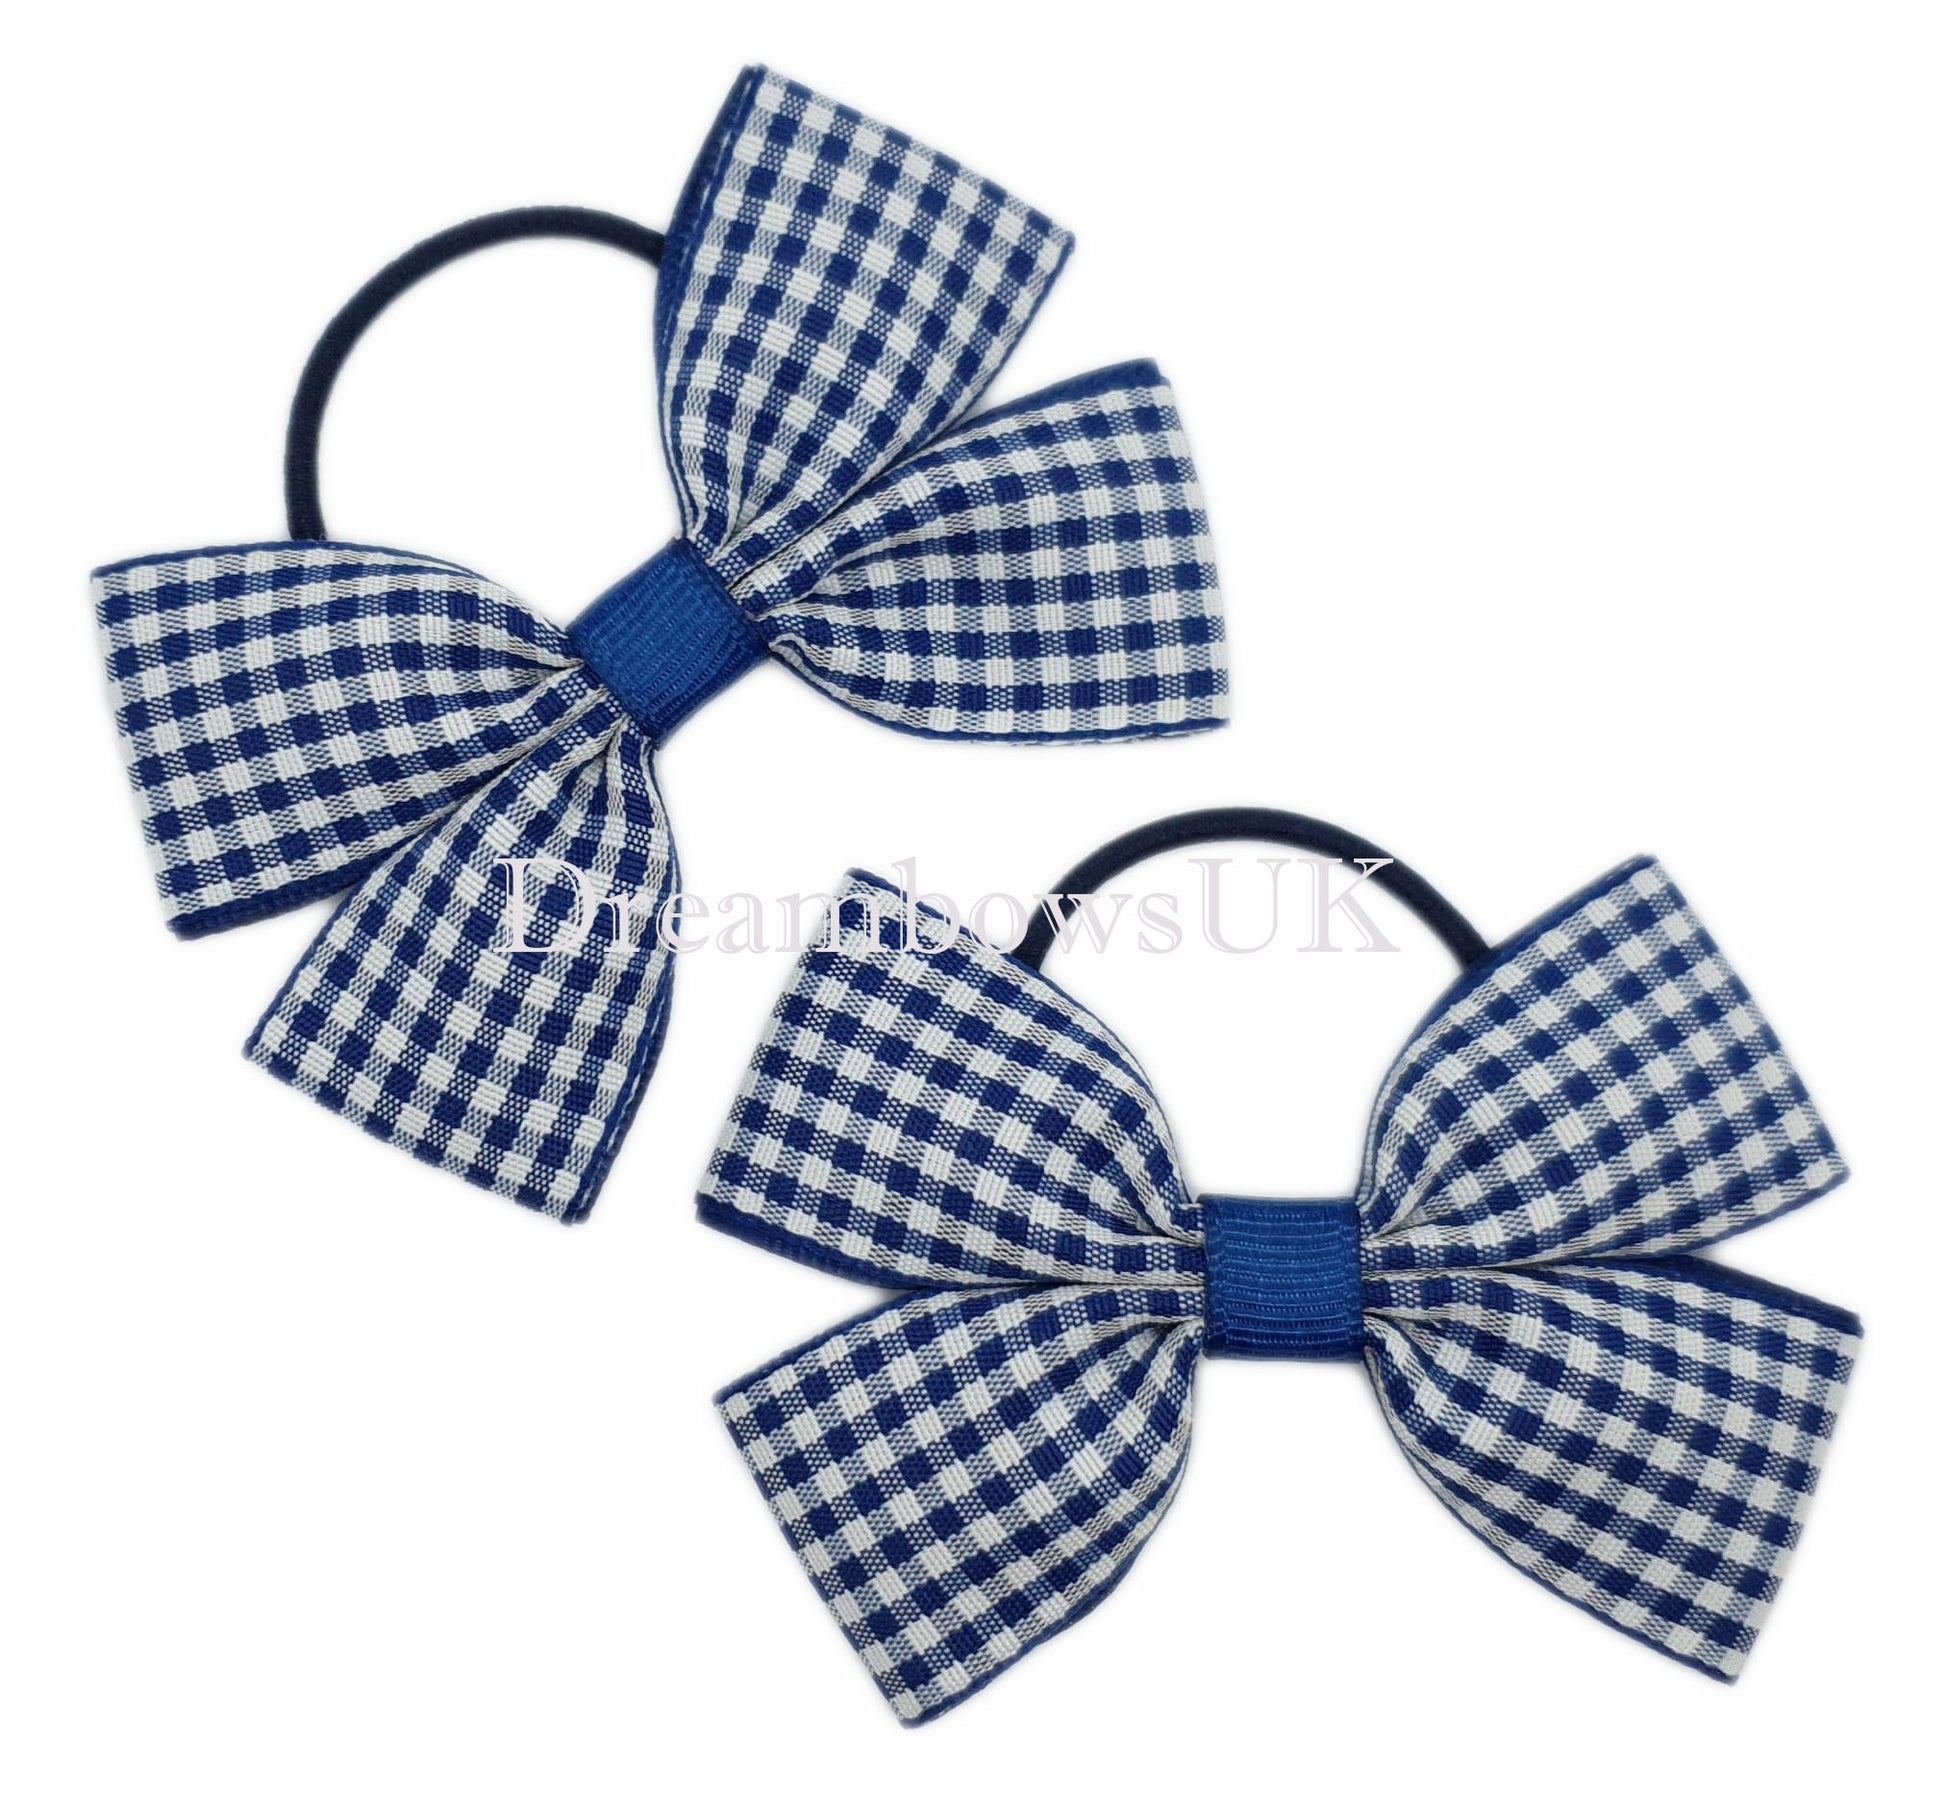 Navy blue school gingham hair bows on thin hair ties